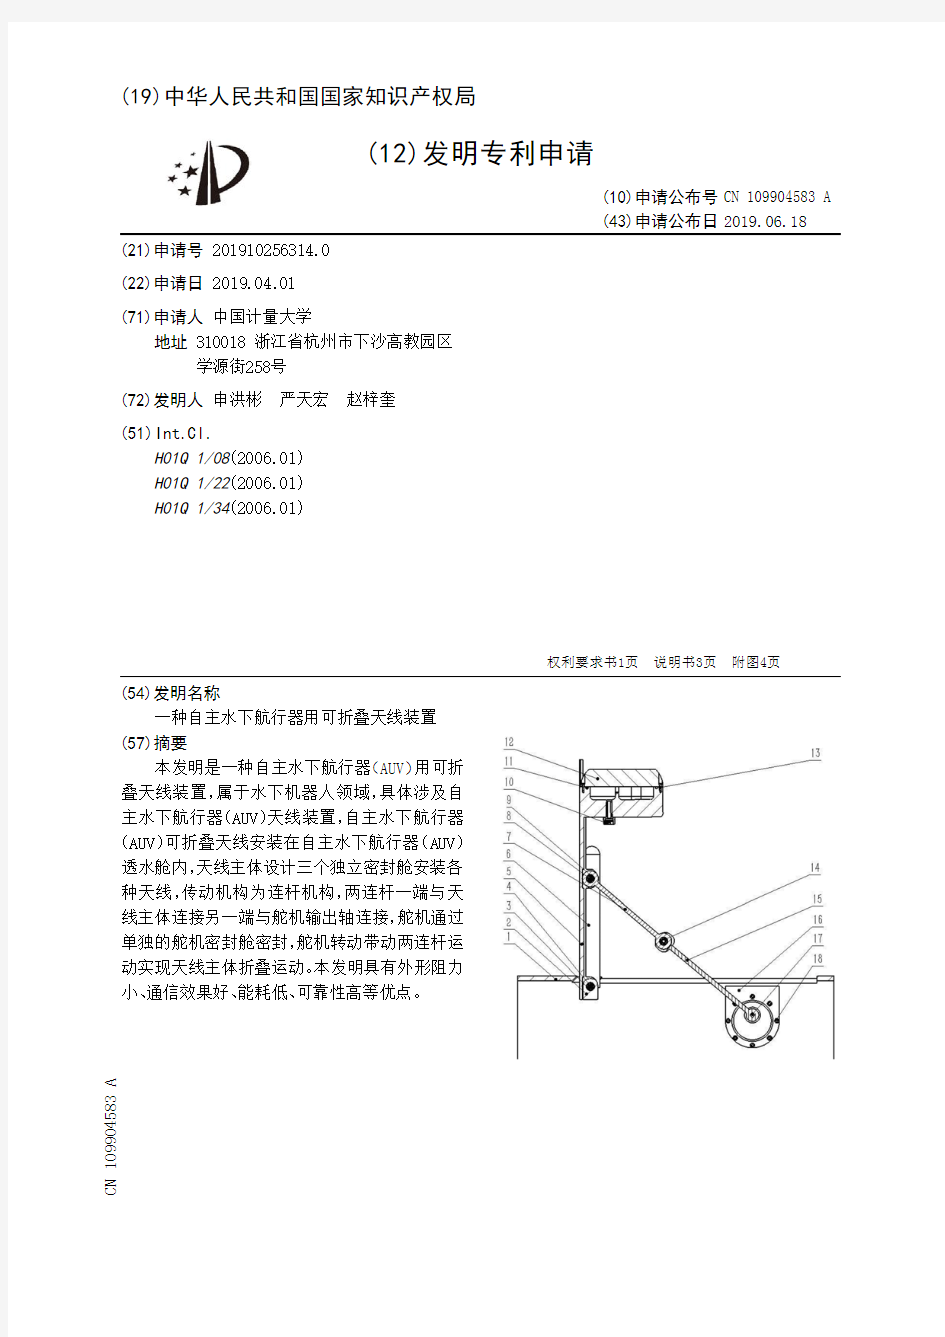 【CN109904583A】一种自主水下航行器用可折叠天线装置【专利】